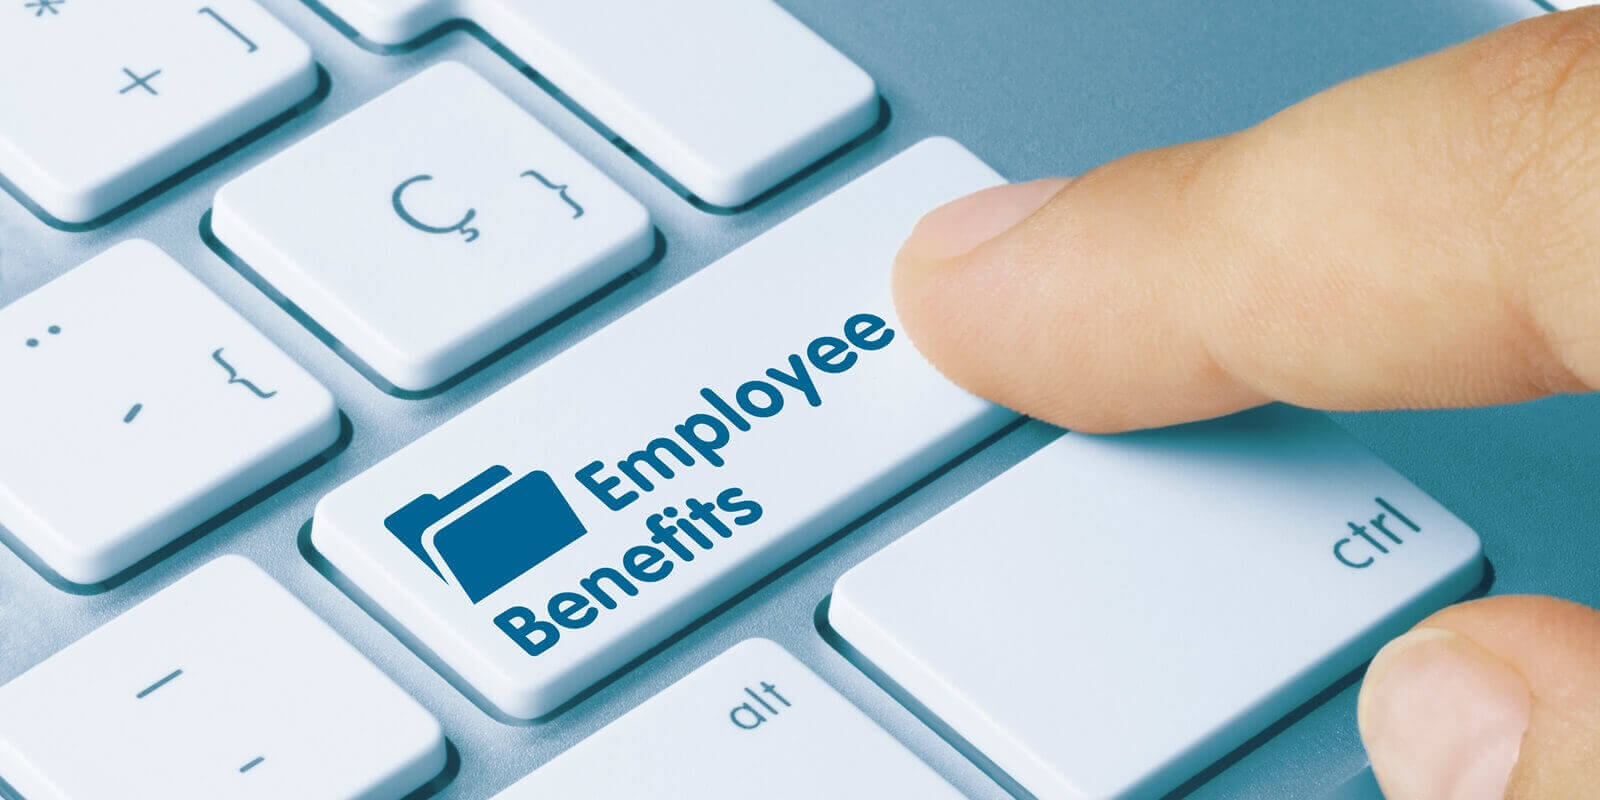 employee benefits button on keyboard